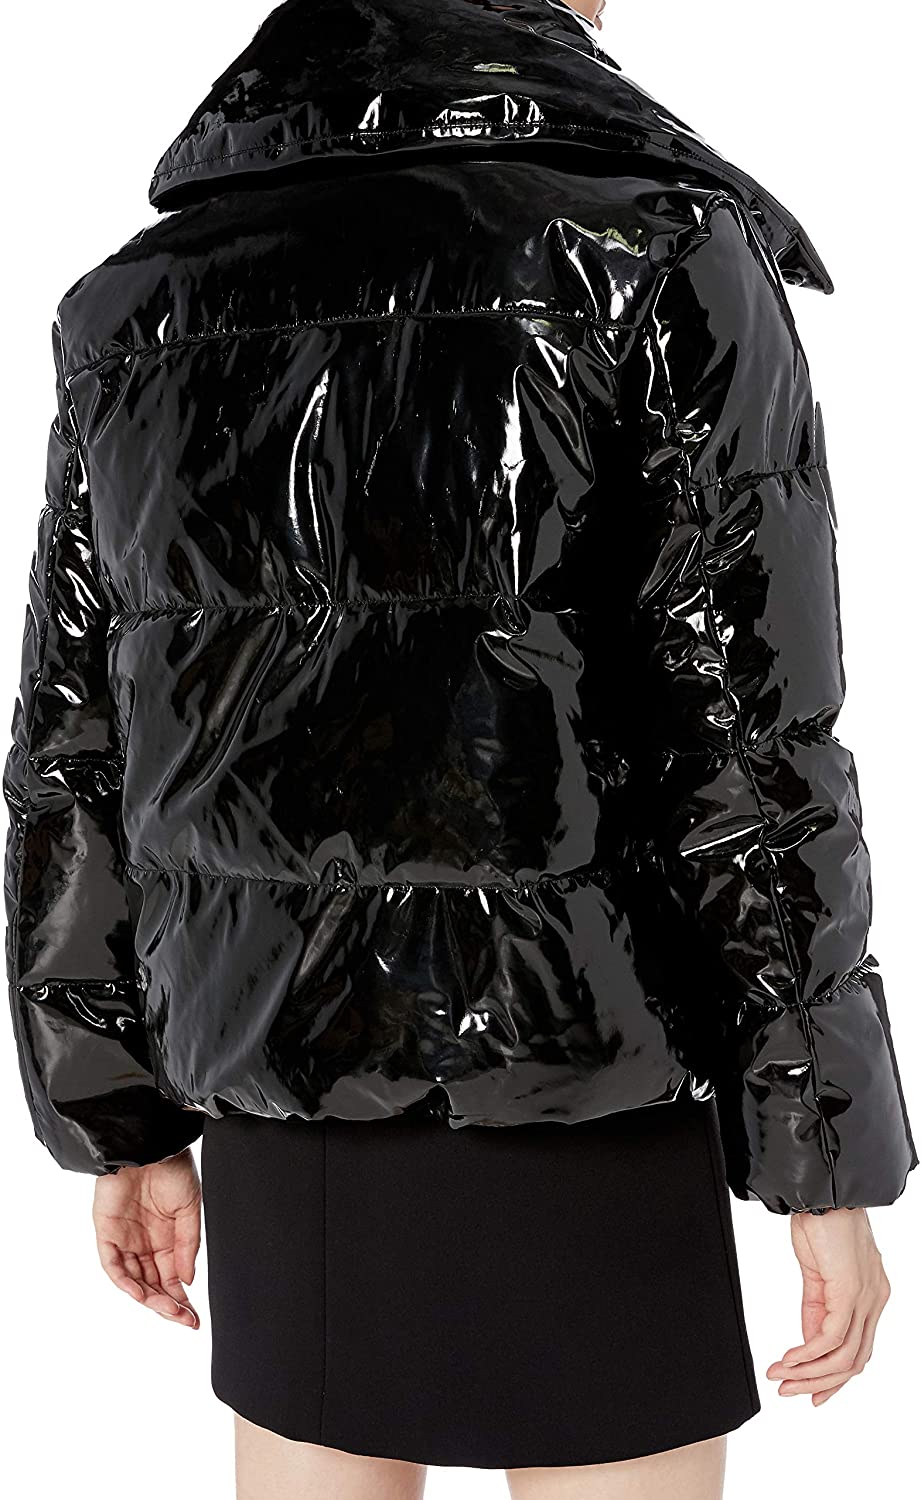 Kendall - Kylie Women's Puffer Coat, Black, Size X-Small 2D2C | eBay